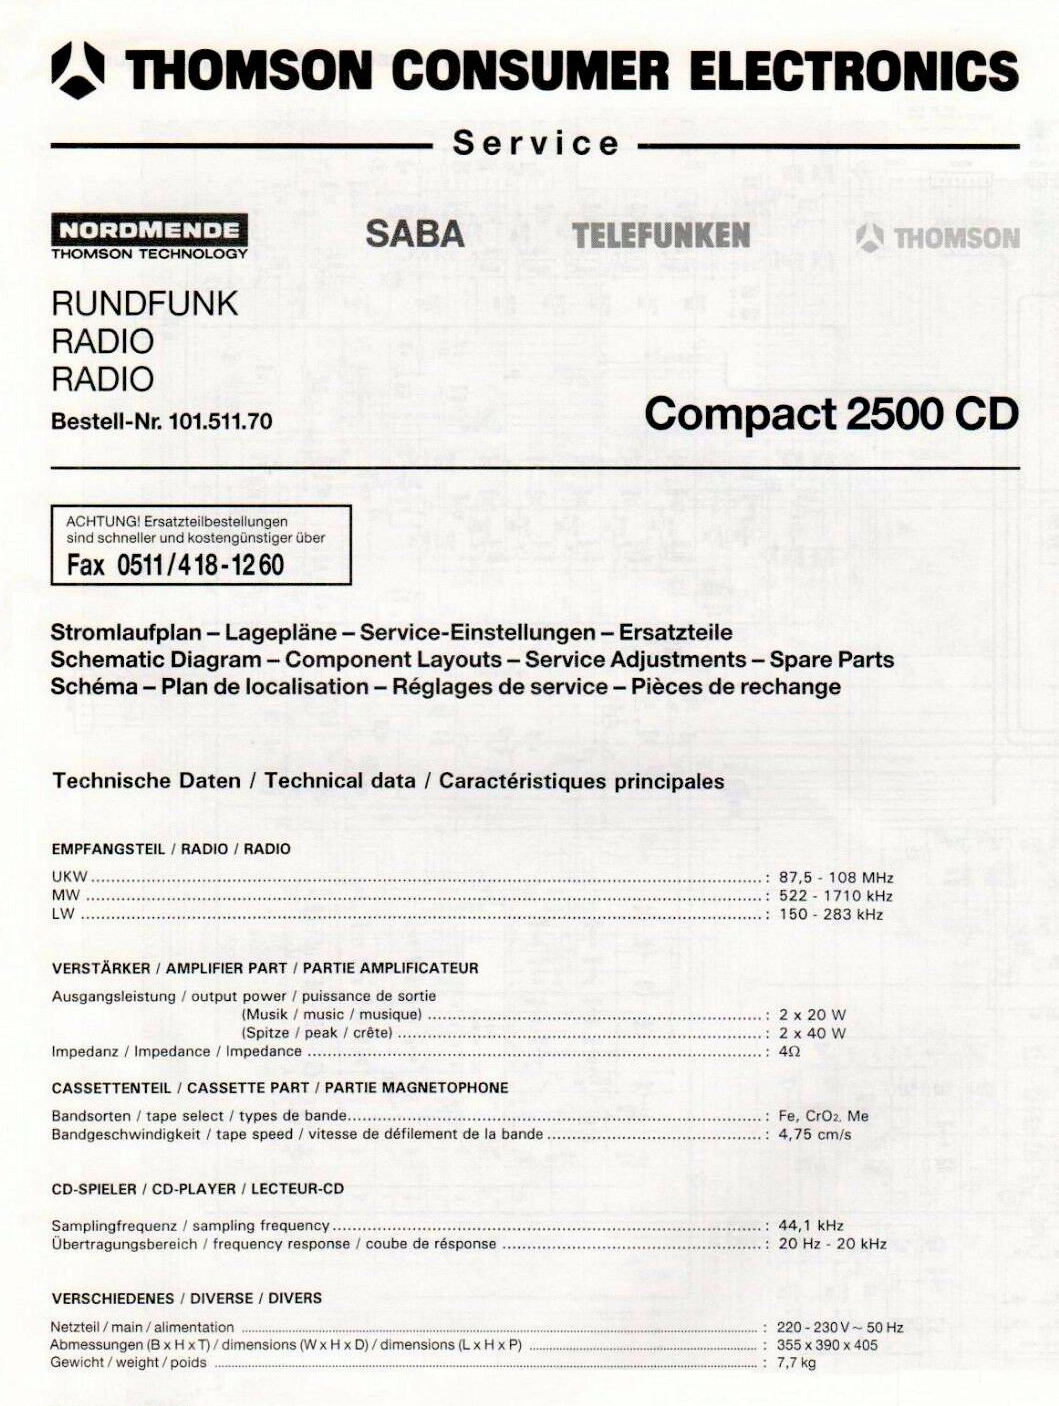 Telefunken Compact System 2500 CD-Daten-1994.jpg